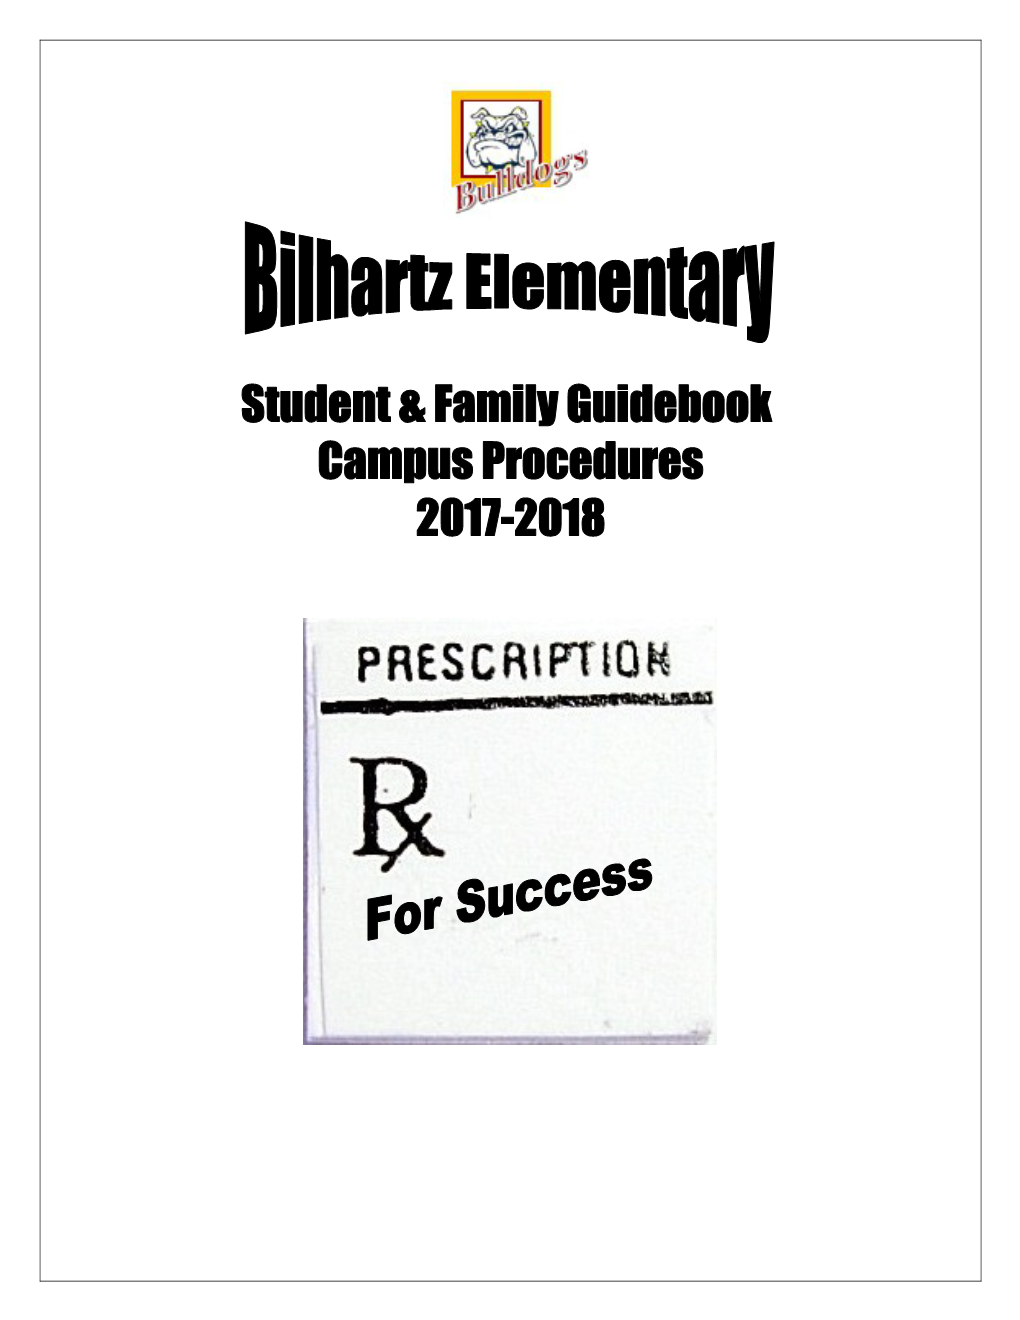 Student & Familyguidebook